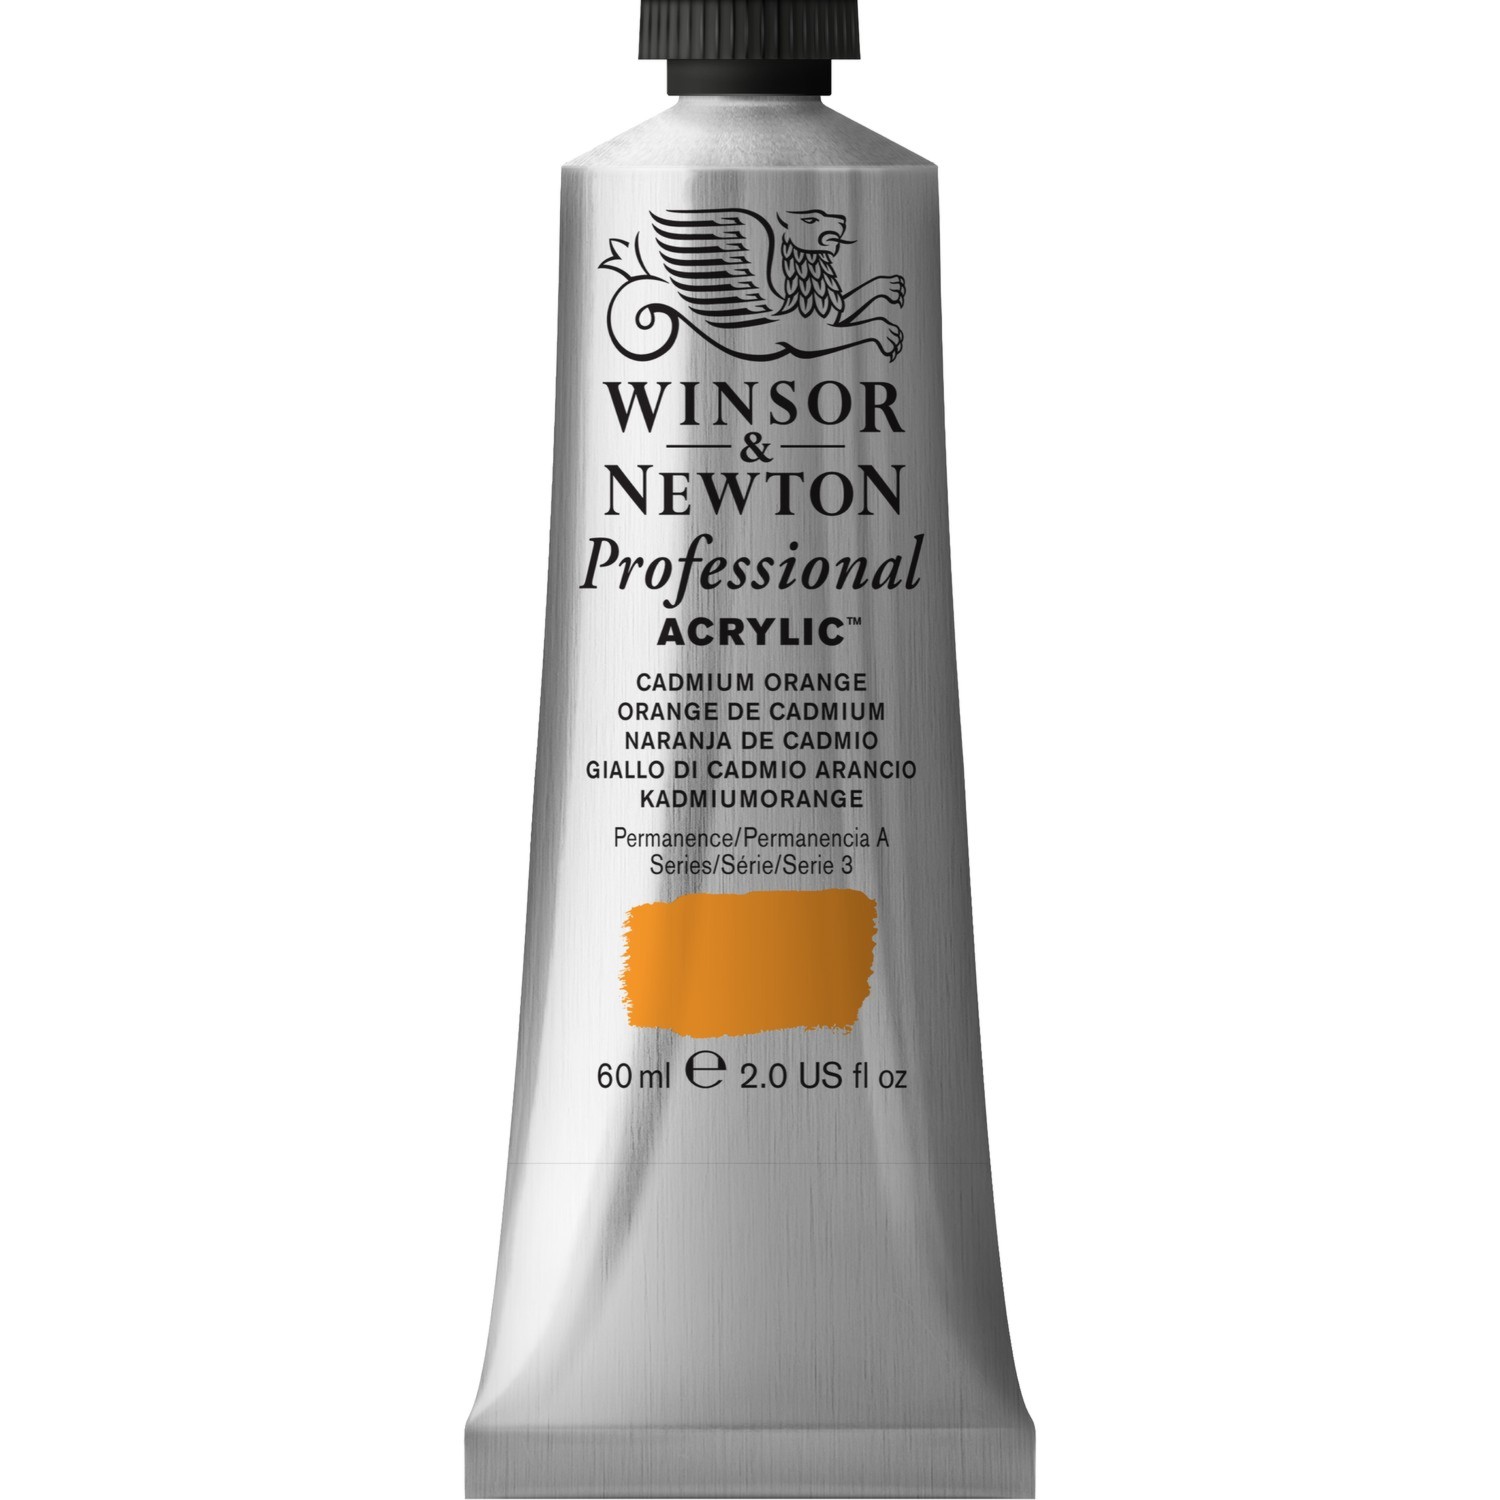 Winsor and Newton 60ml Professional Acrylic Paint - Cadmium Orange Image 1